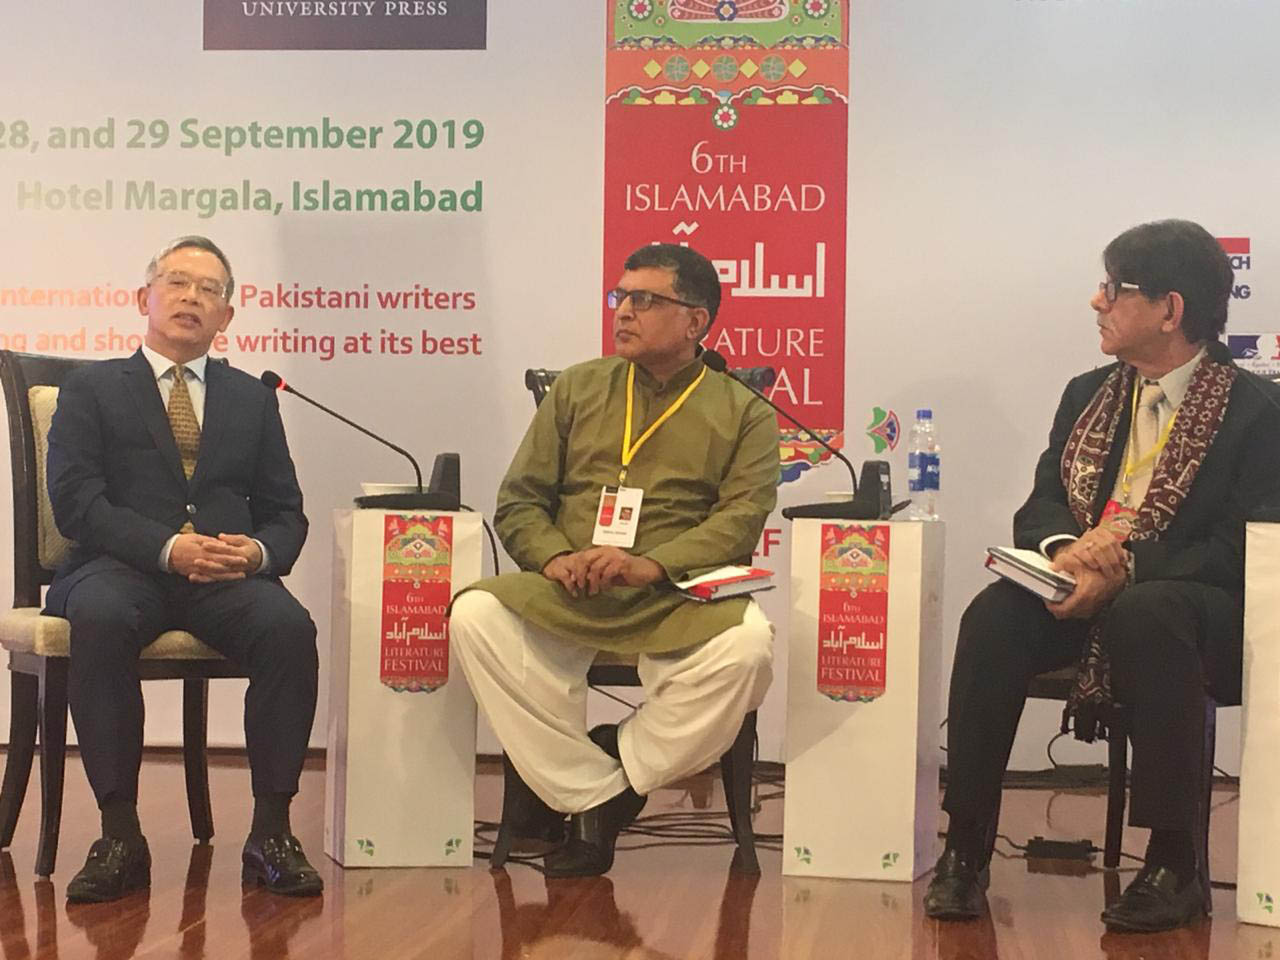 Islamabad Literature Festival 2019 - Youlin Magazine